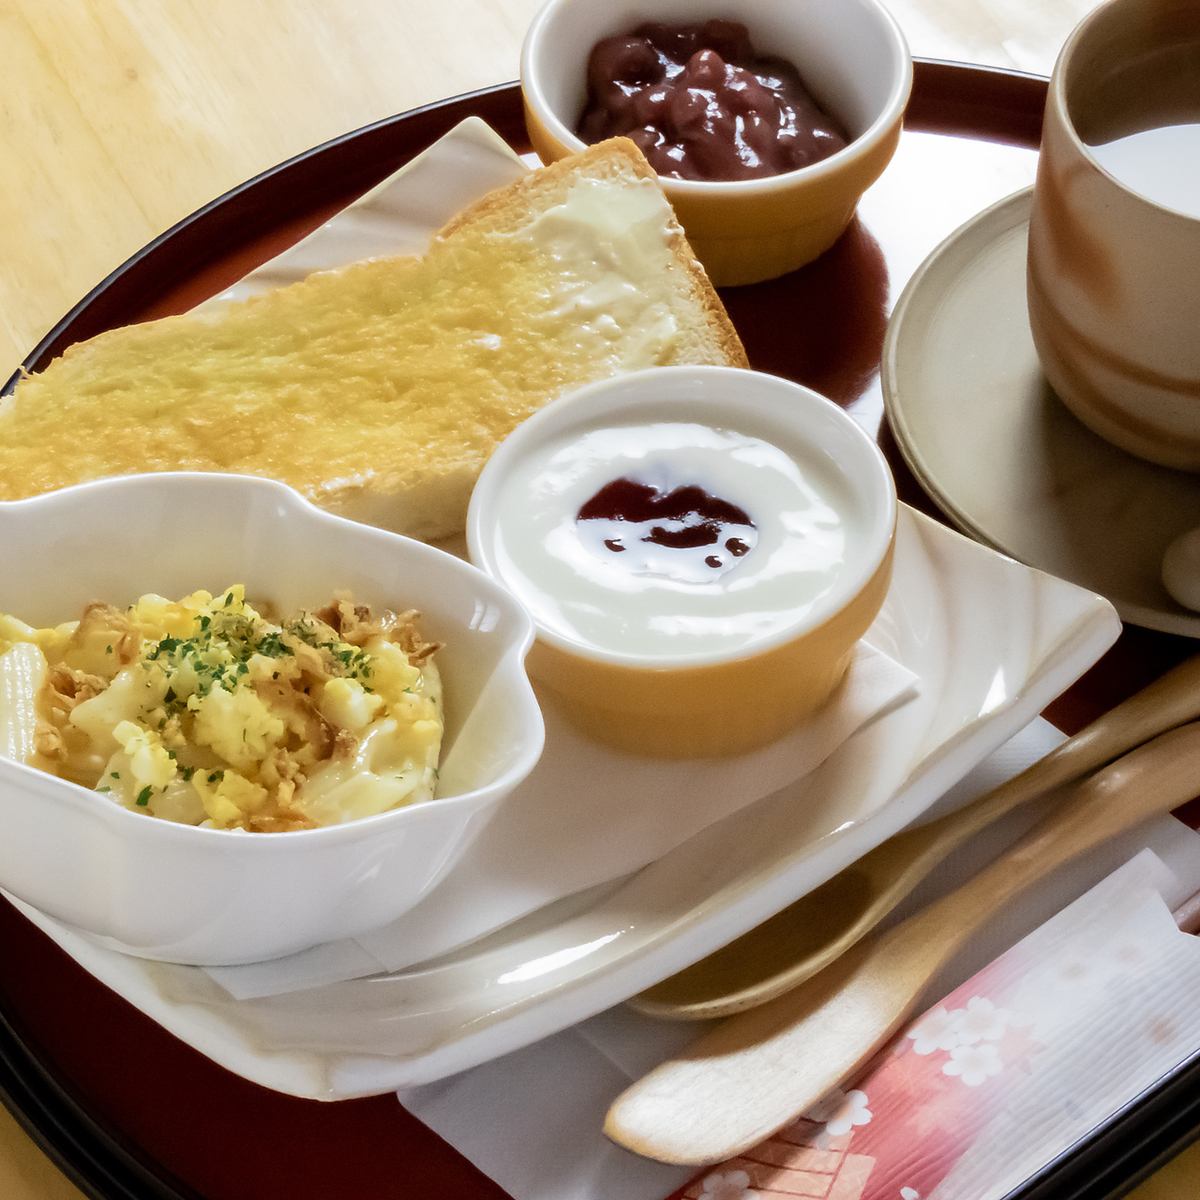 Kar谷市高须町的《 Japanese Cafe Poaro》。请在平静的气氛中度过轻松的时光。